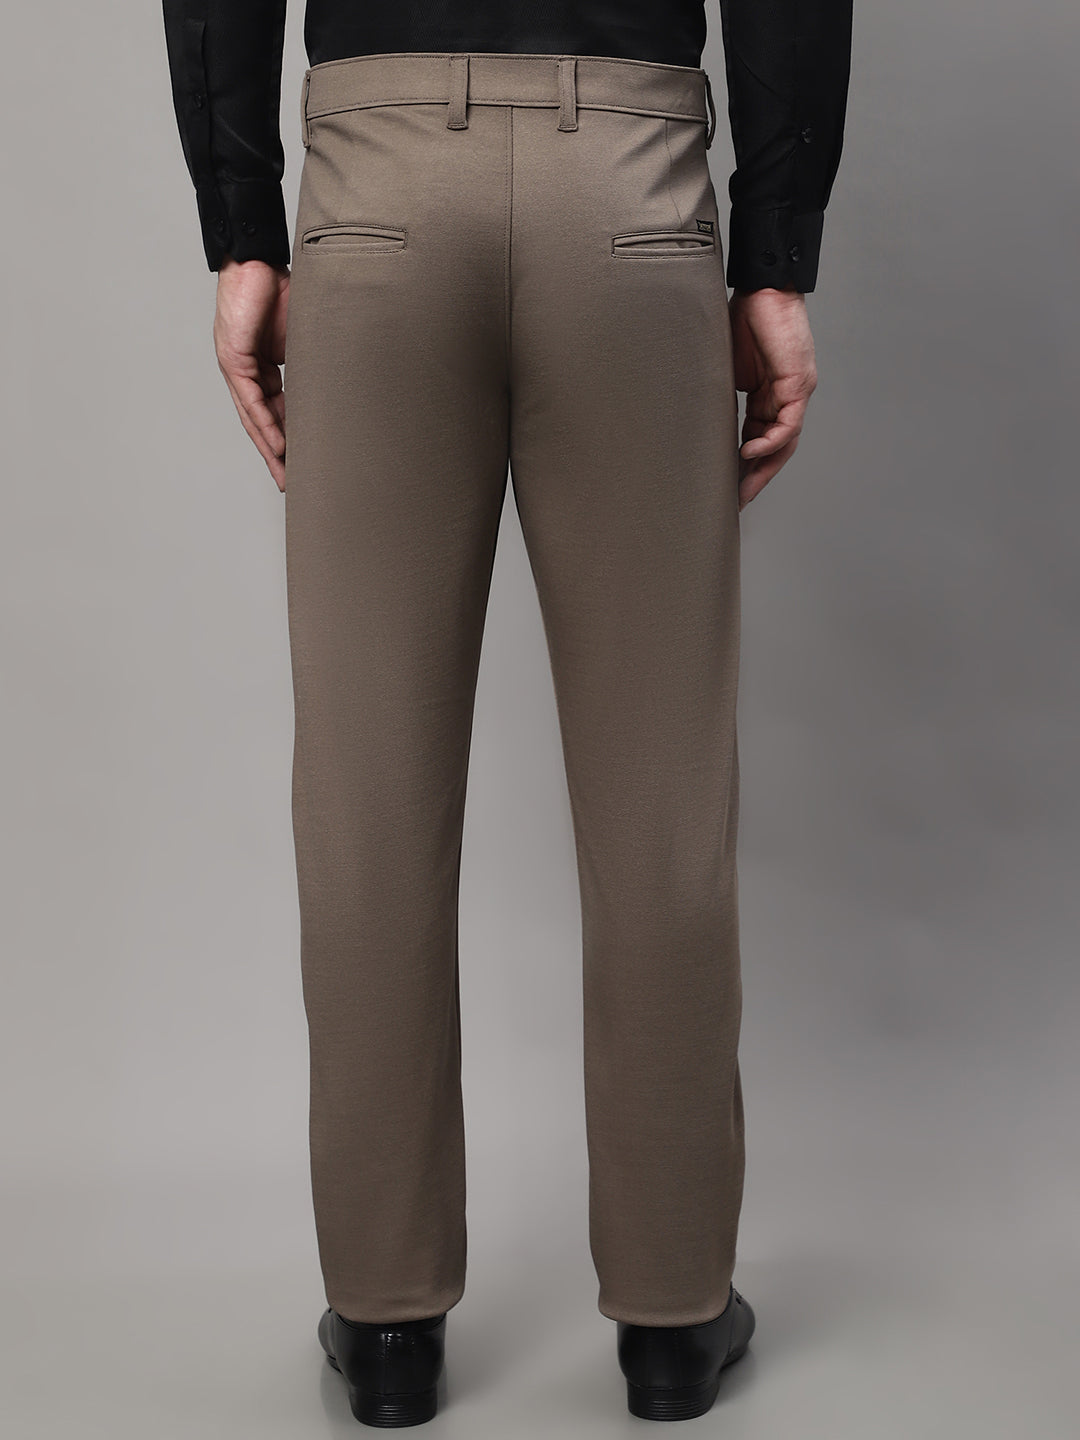 Buy Mens Formal Dress Pants Online | Merchant Marine